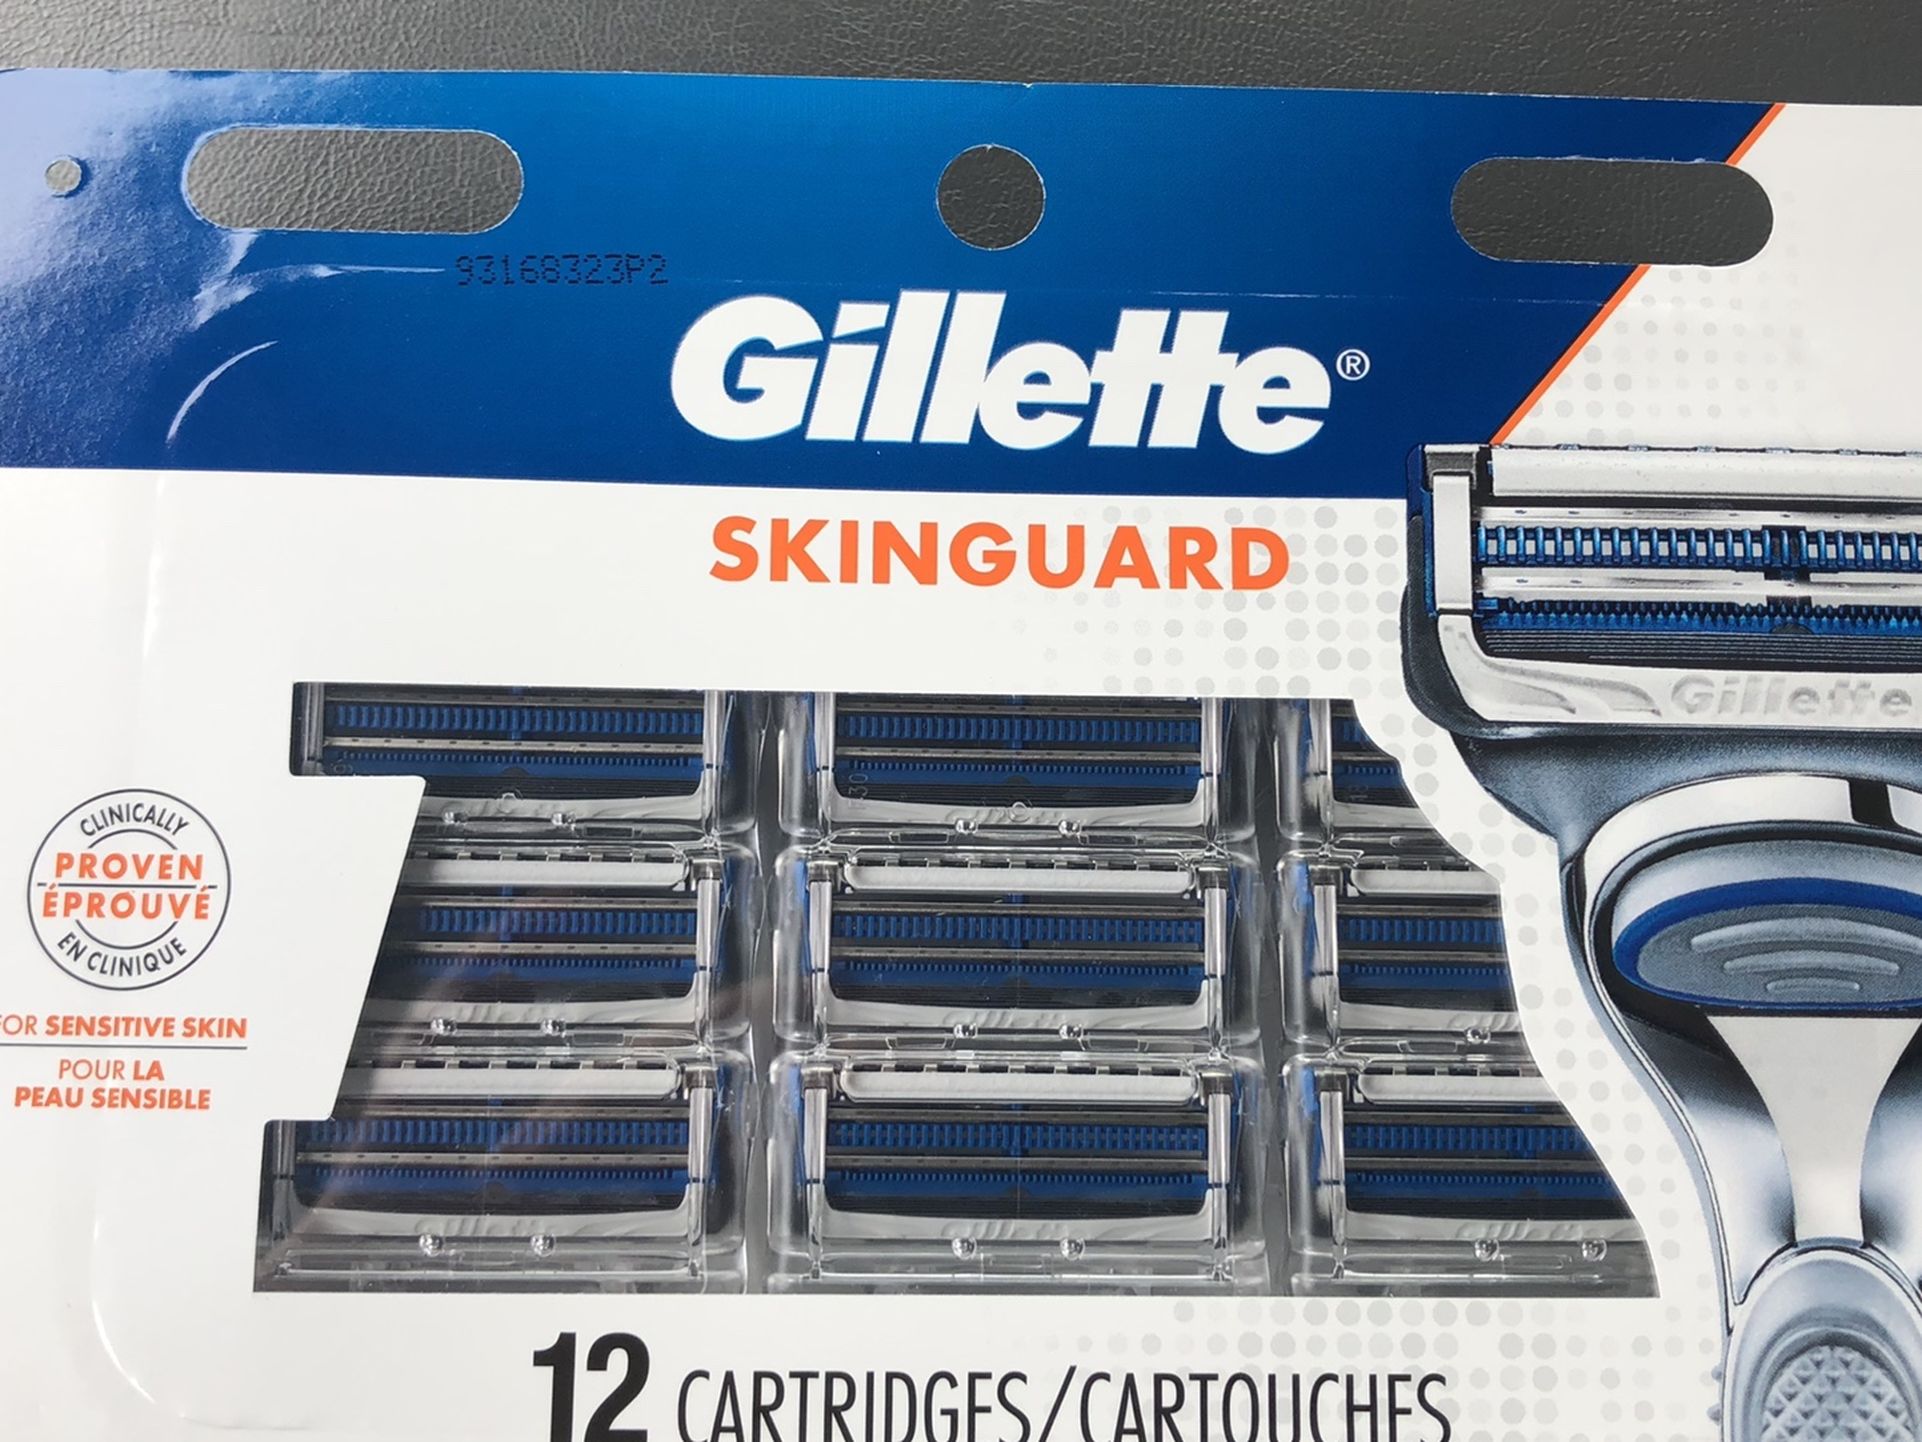 Gillette Skinguard 12 Pack Razor Cartridge Refills